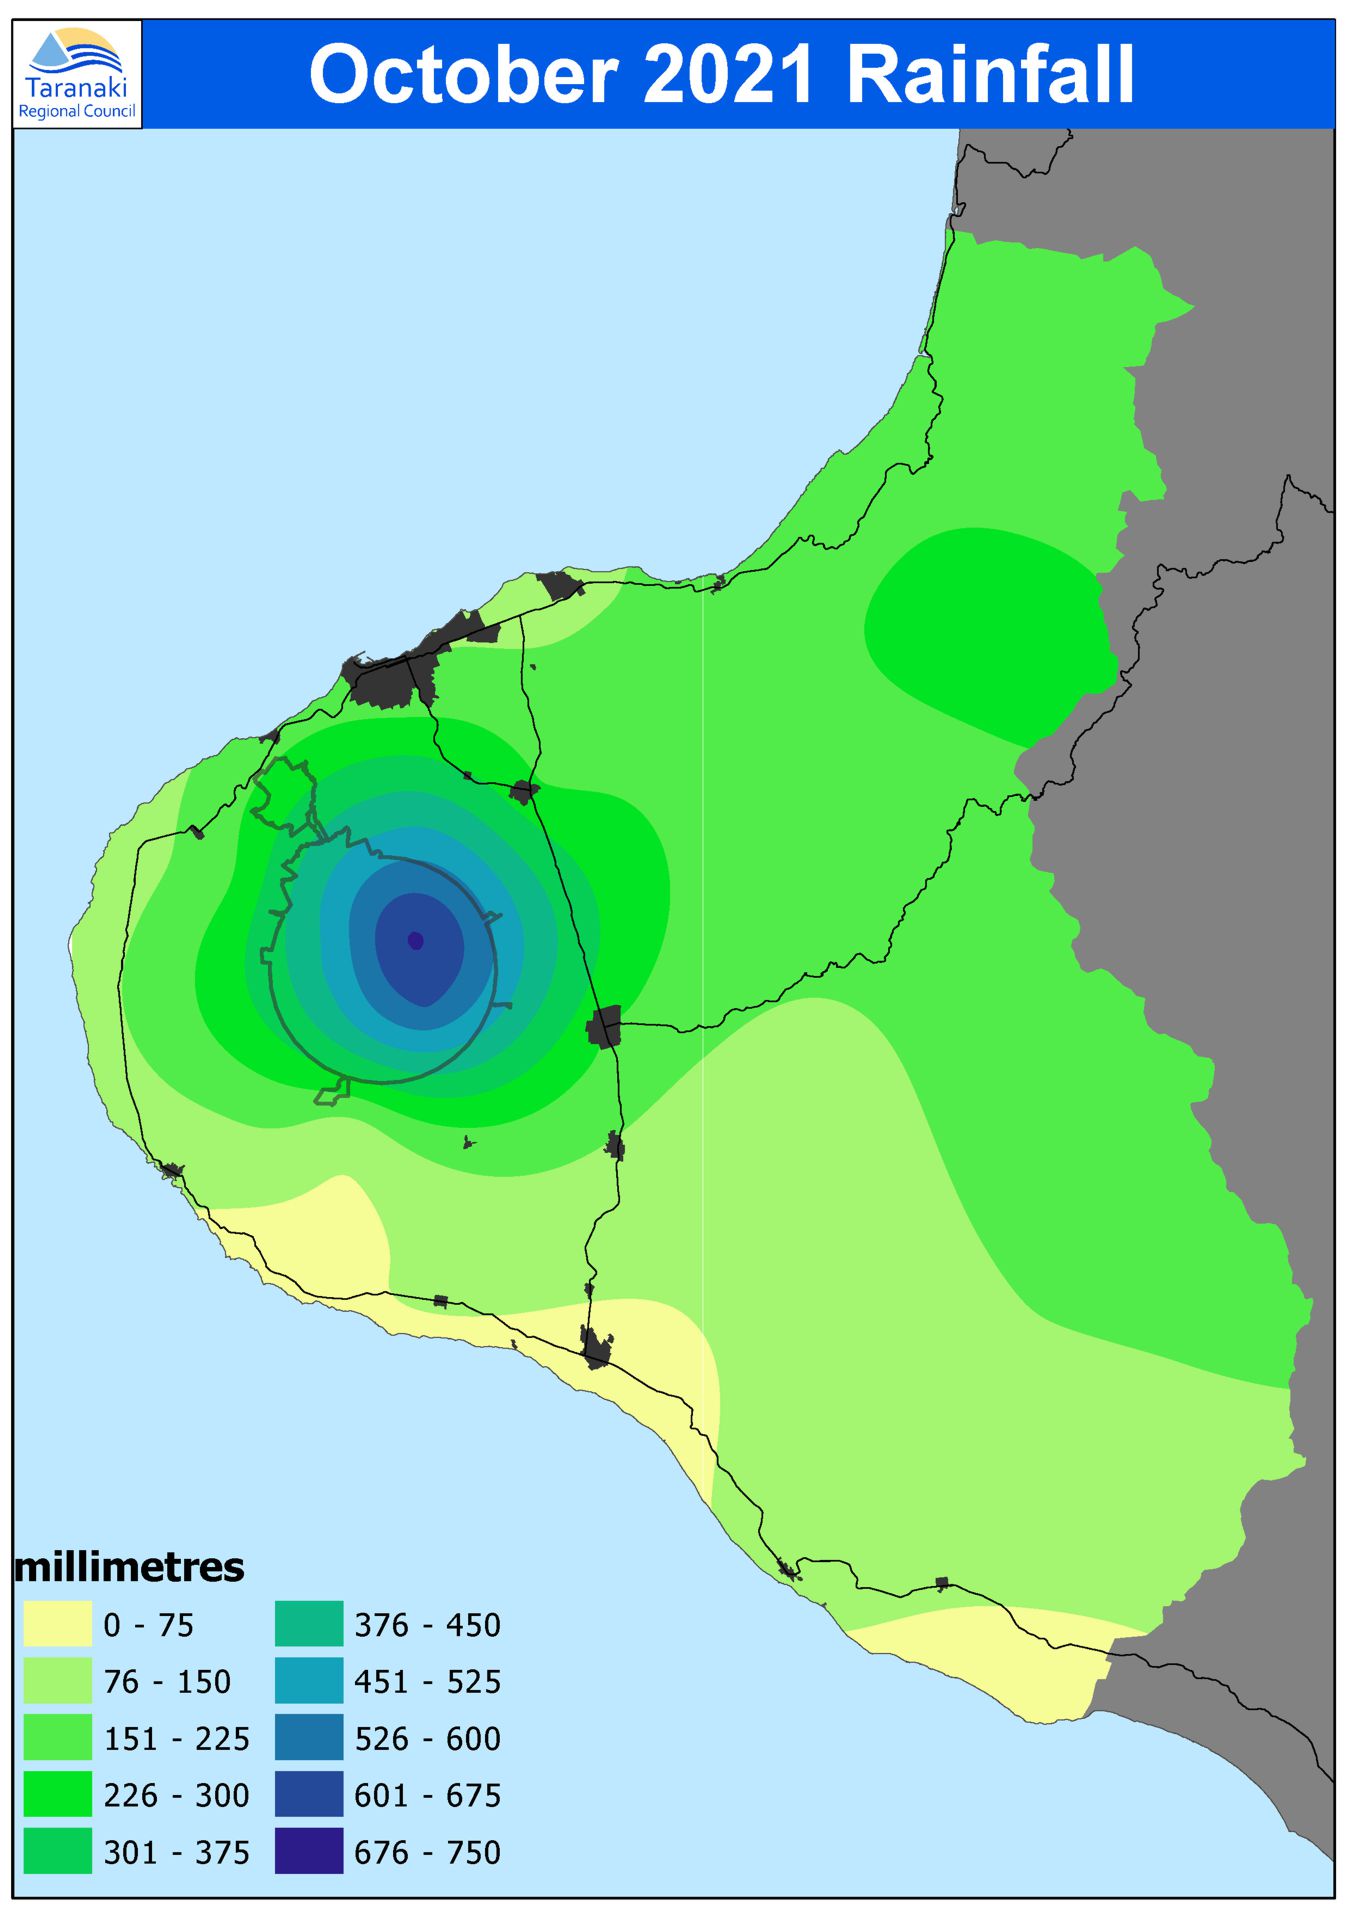 October 2021 rainfall distribution